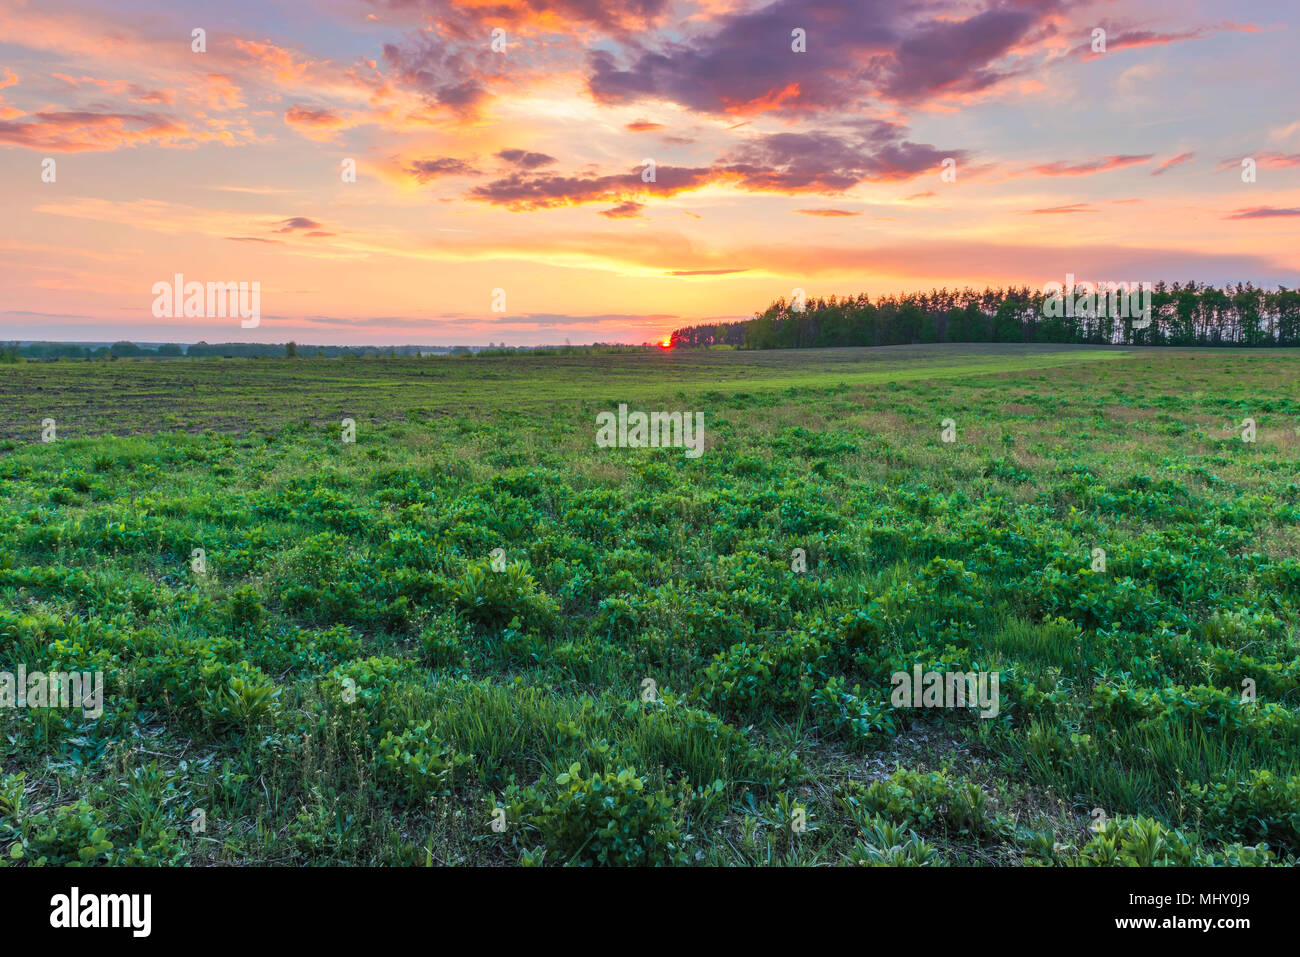 Sonnenuntergang im Frühjahr Feld in der Region Kiew, Ukraine. Stockfoto